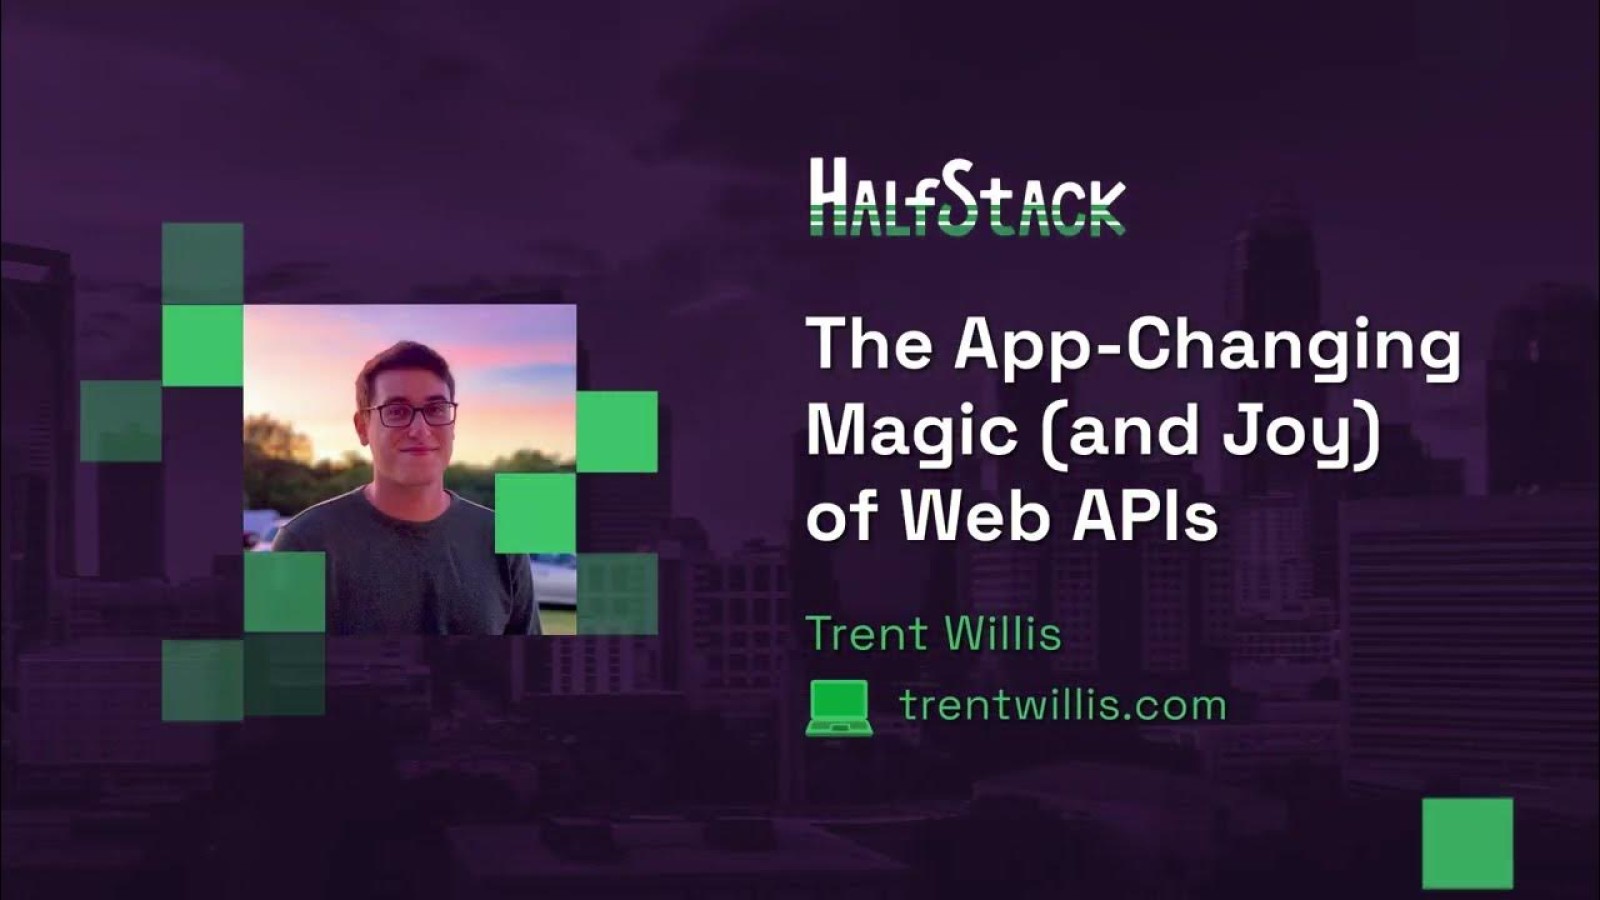 The app-changing magic (and joy) of Web APIs